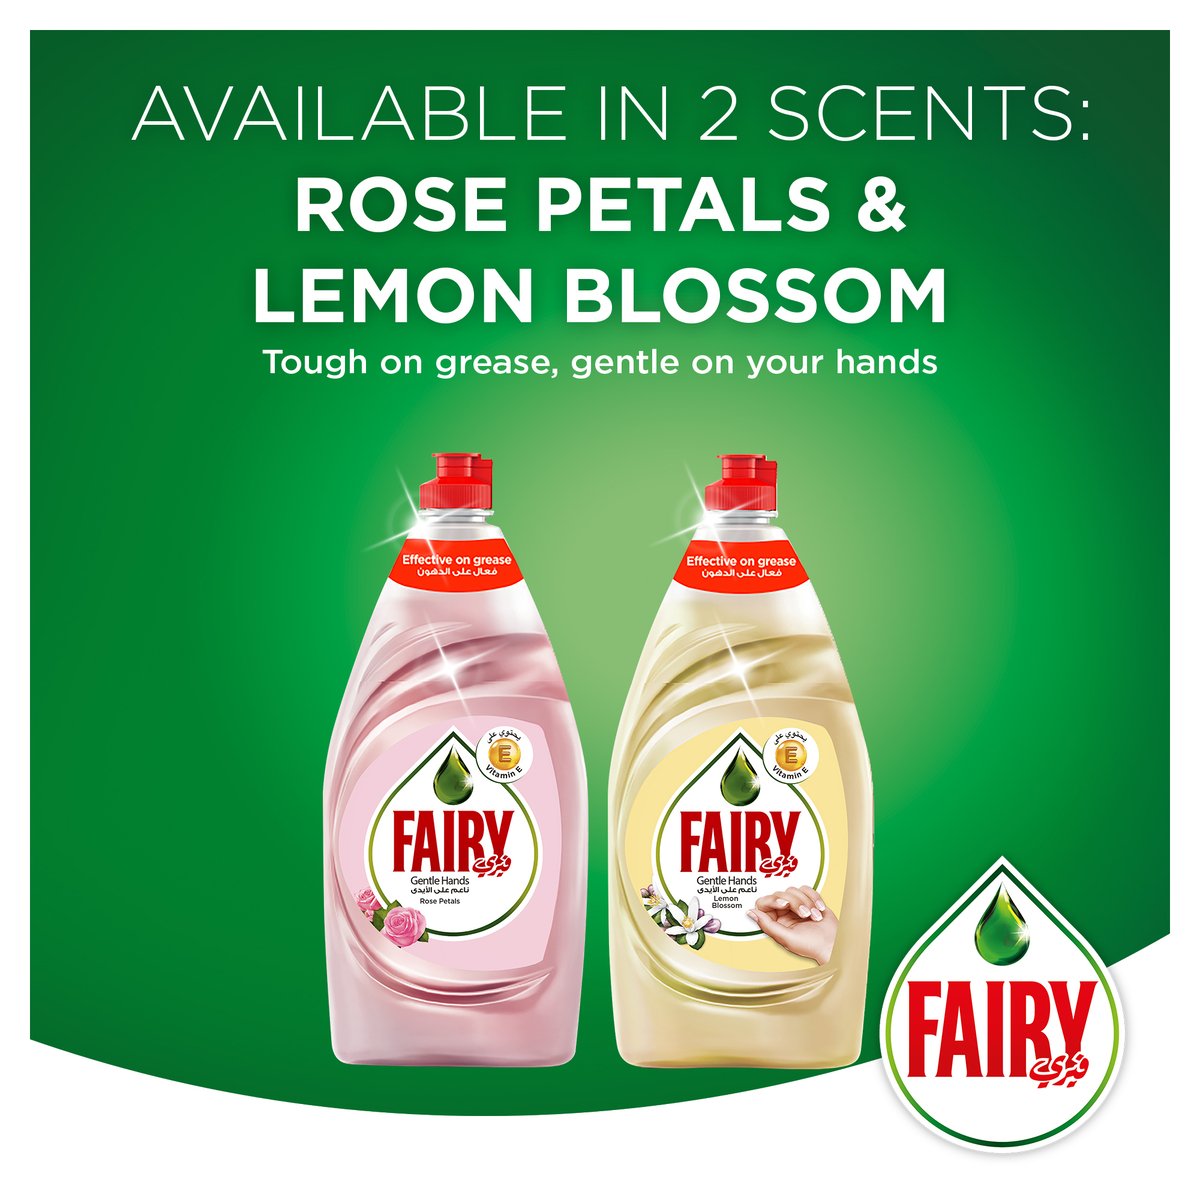 Fairy Gentle Hands Lemon Blossom Dishwashing Liquid Soap 750 ml